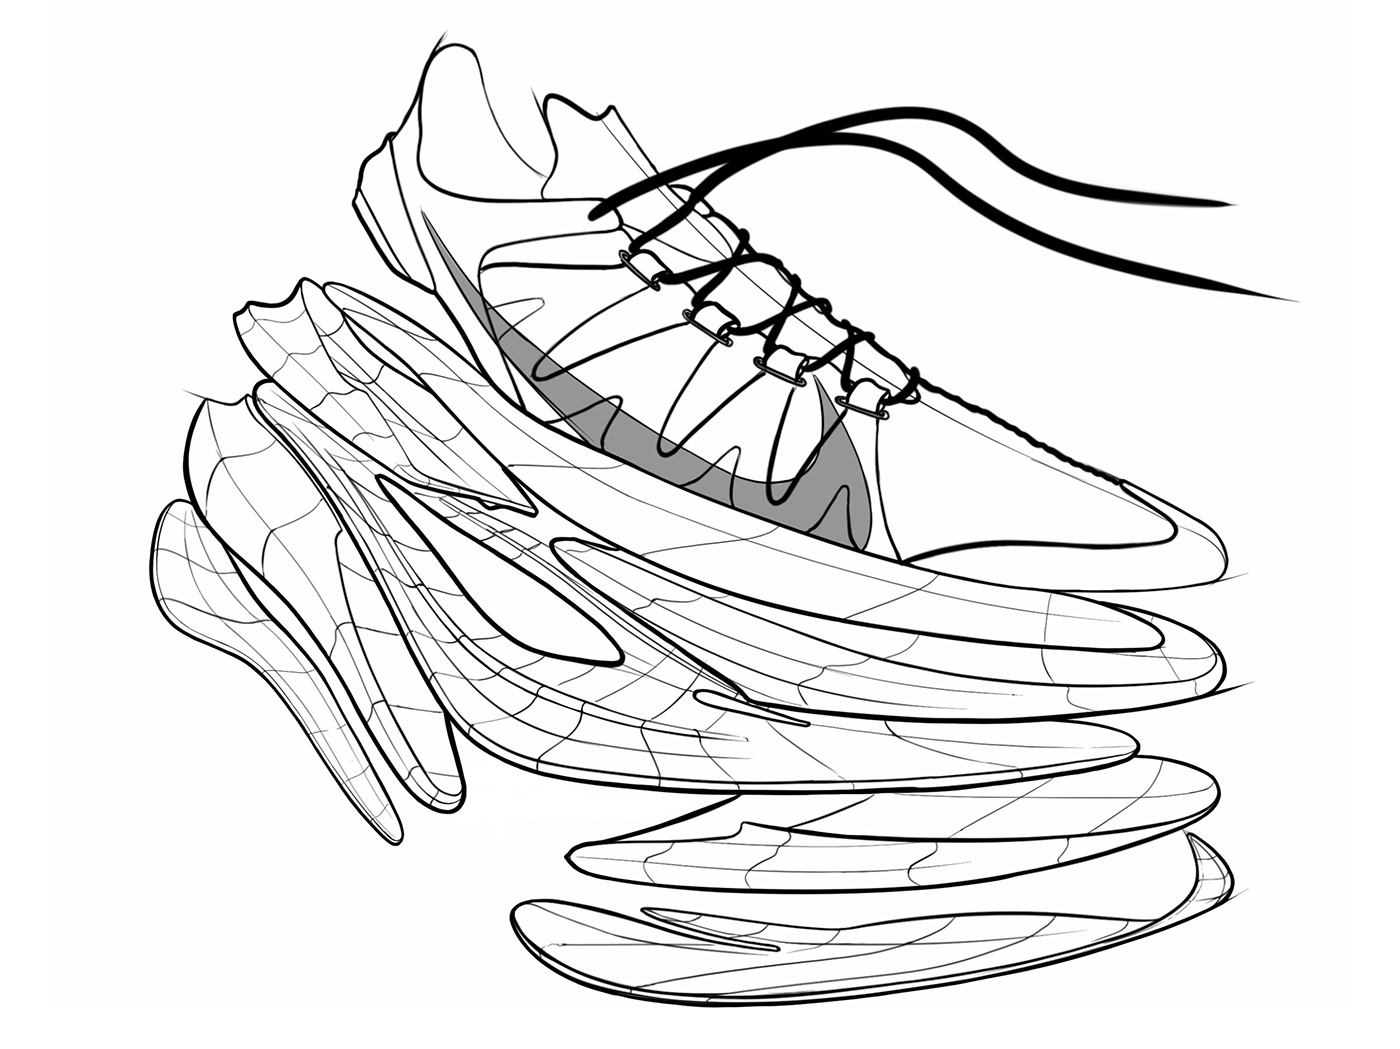 concept conceptkicks design footwear footweardesign innovation Nike Pensole sketching